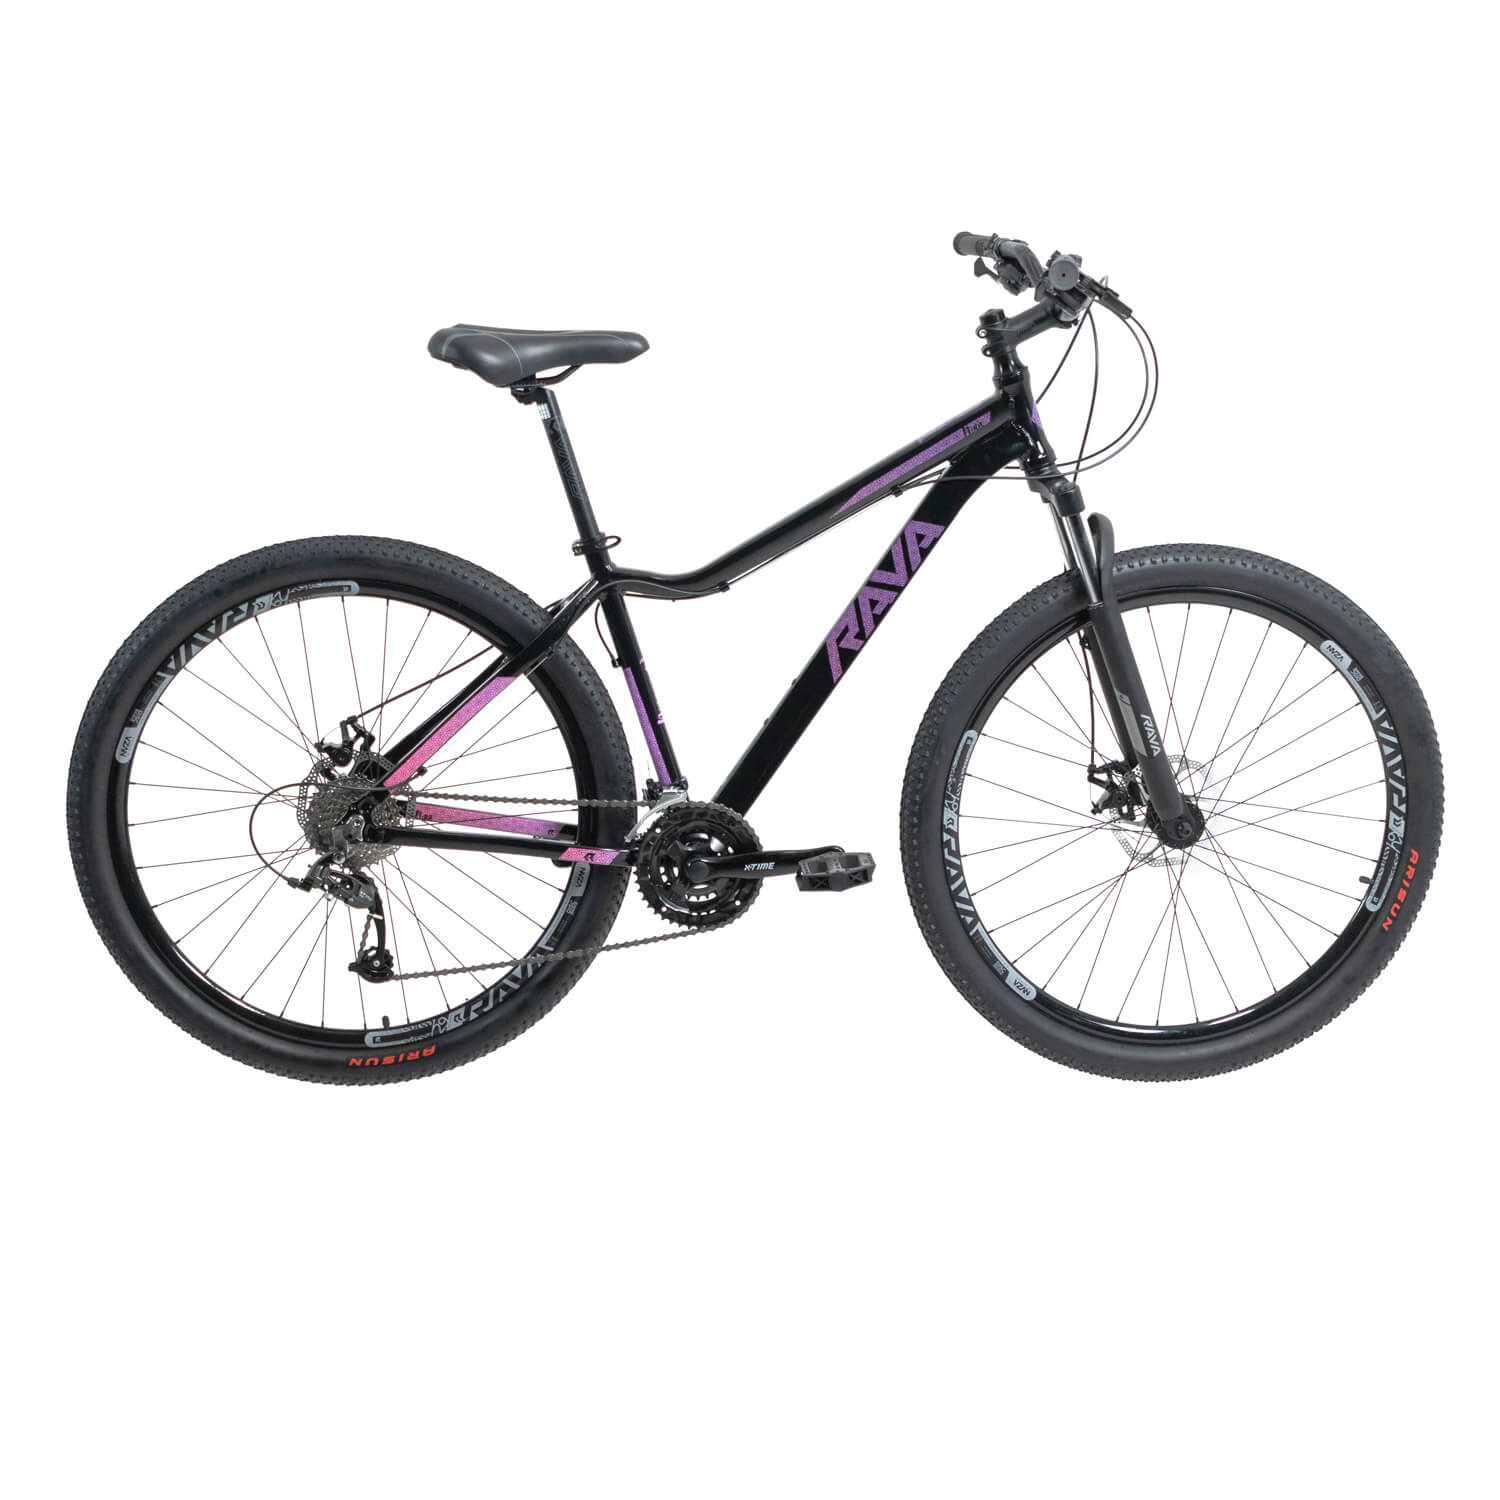 Bicicleta Rava Nina | 24 v. - Preto/Pink/Violeta, 15.5"